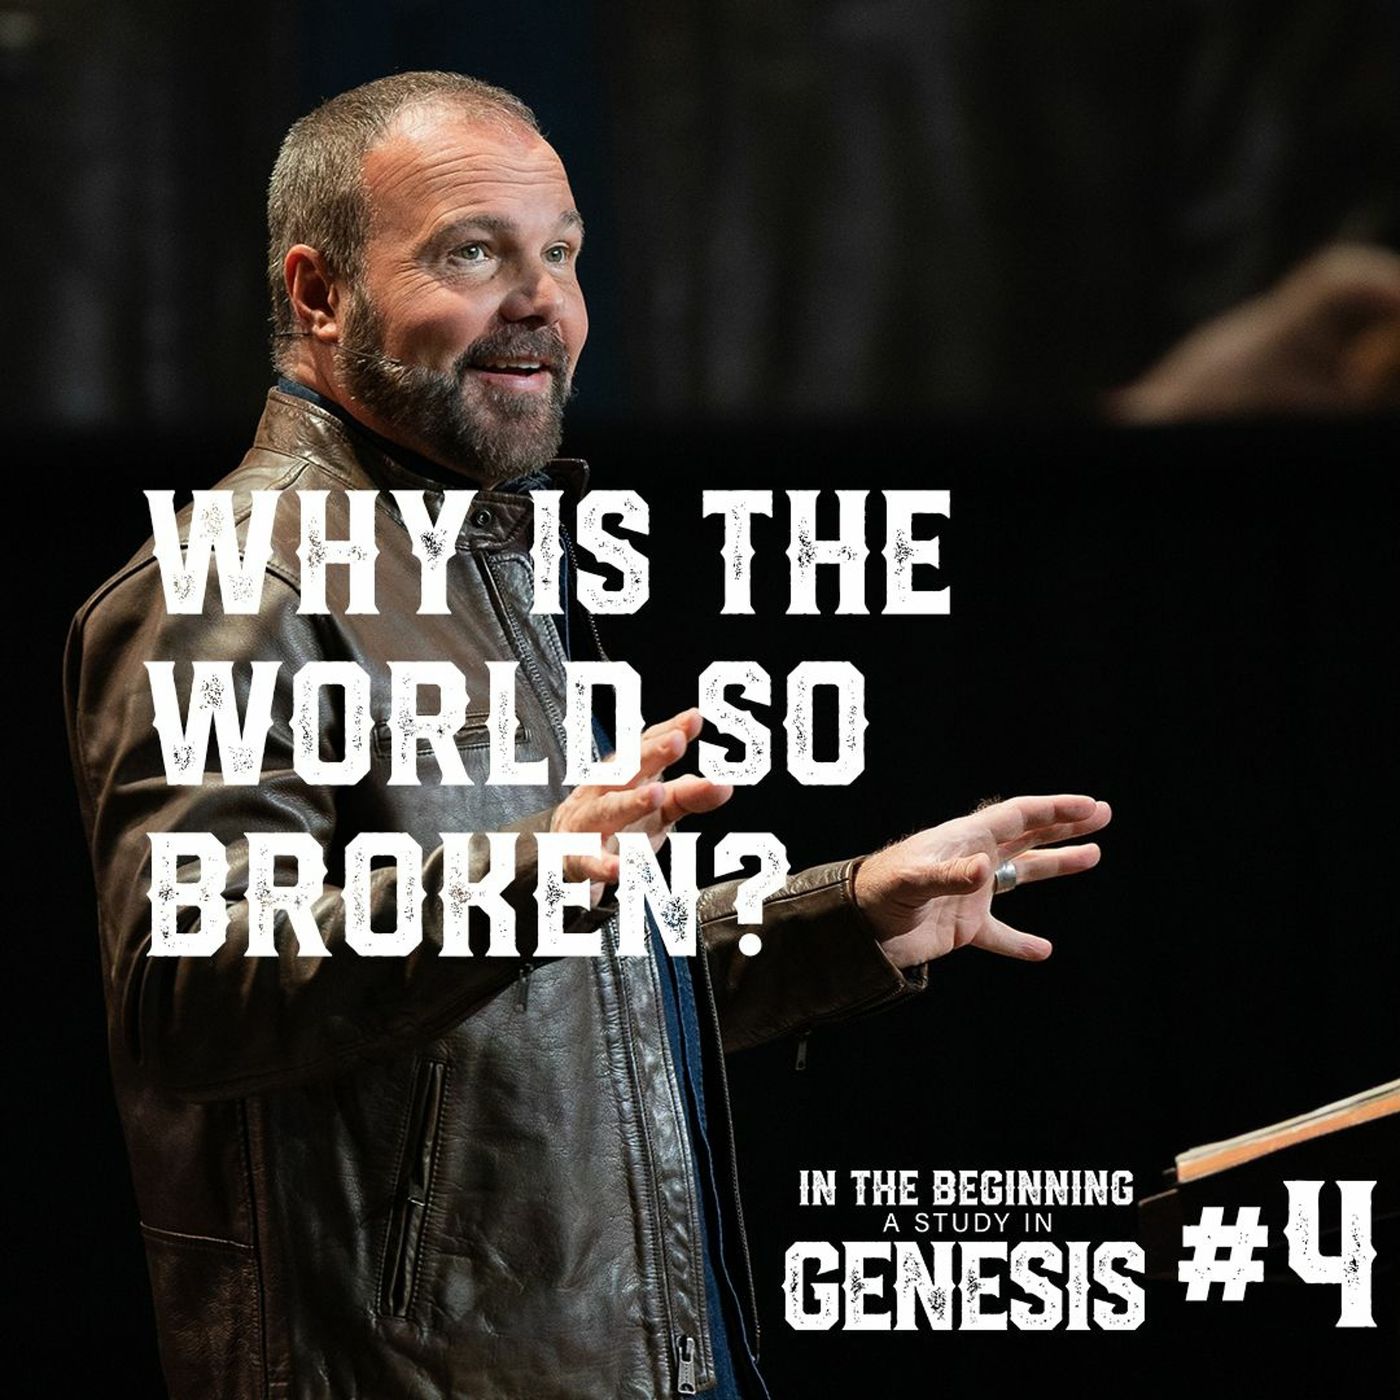 Genesis #4 - Why is the World so Broken?